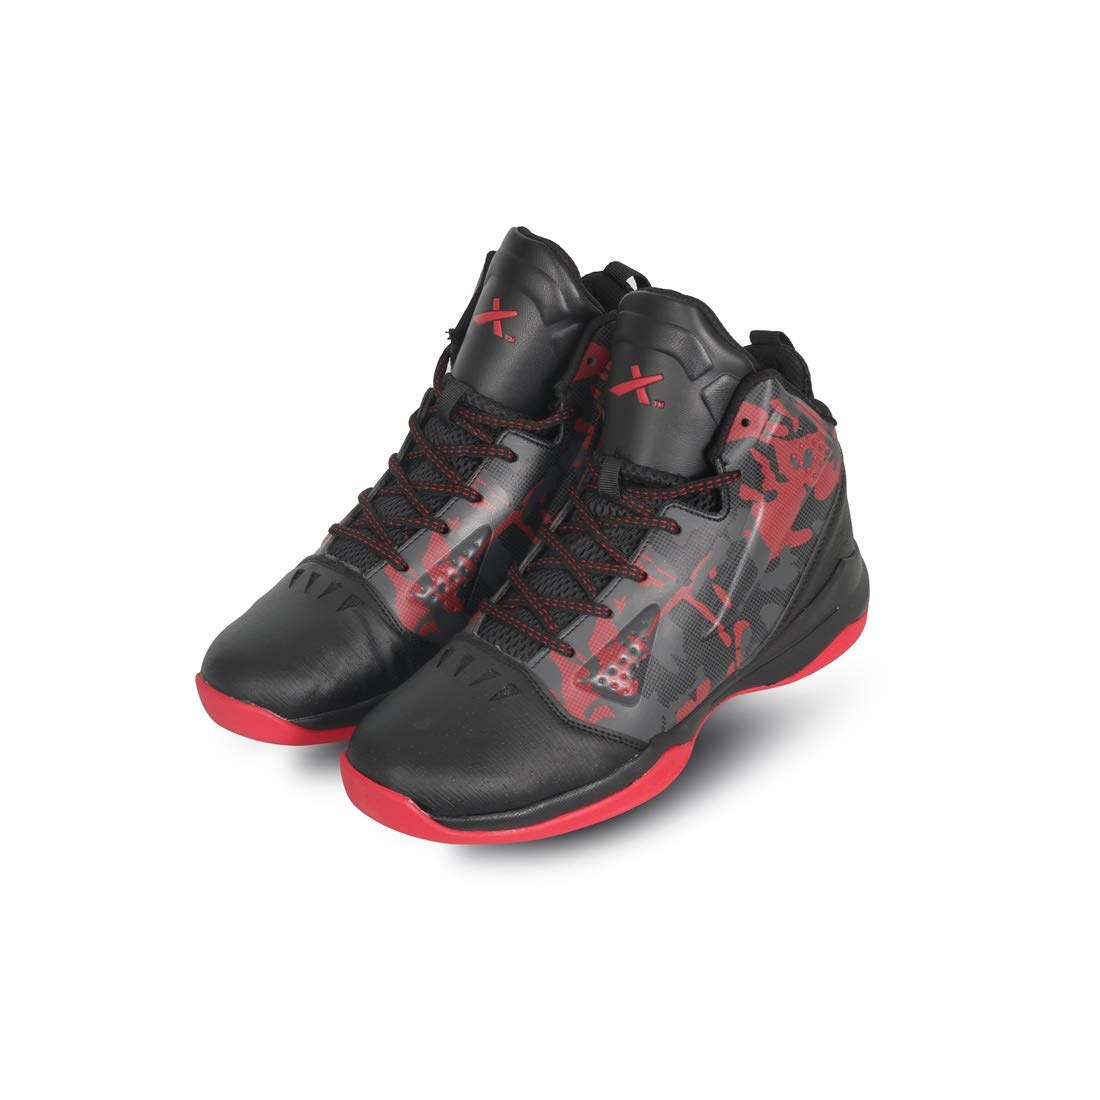 Vector X BB-19 Basketball Shoes for Men's (Black-Red) - Best Price online Prokicksports.com